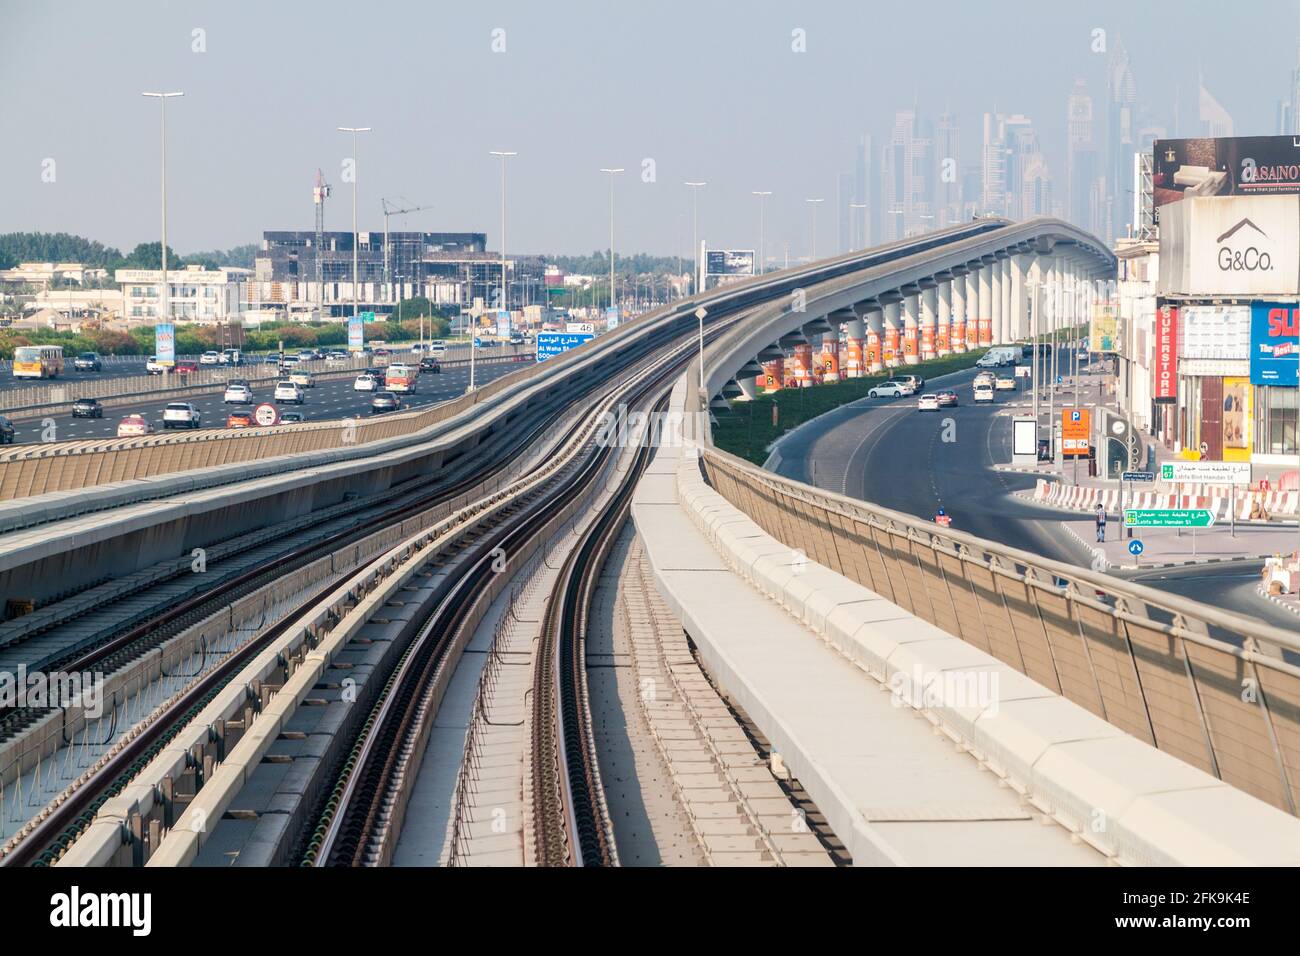 DUBAI, UAE - OCTOBER 21, 2016: Tracks of an elevated stretch of Dubai metro, United Arab Emirates Stock Photo